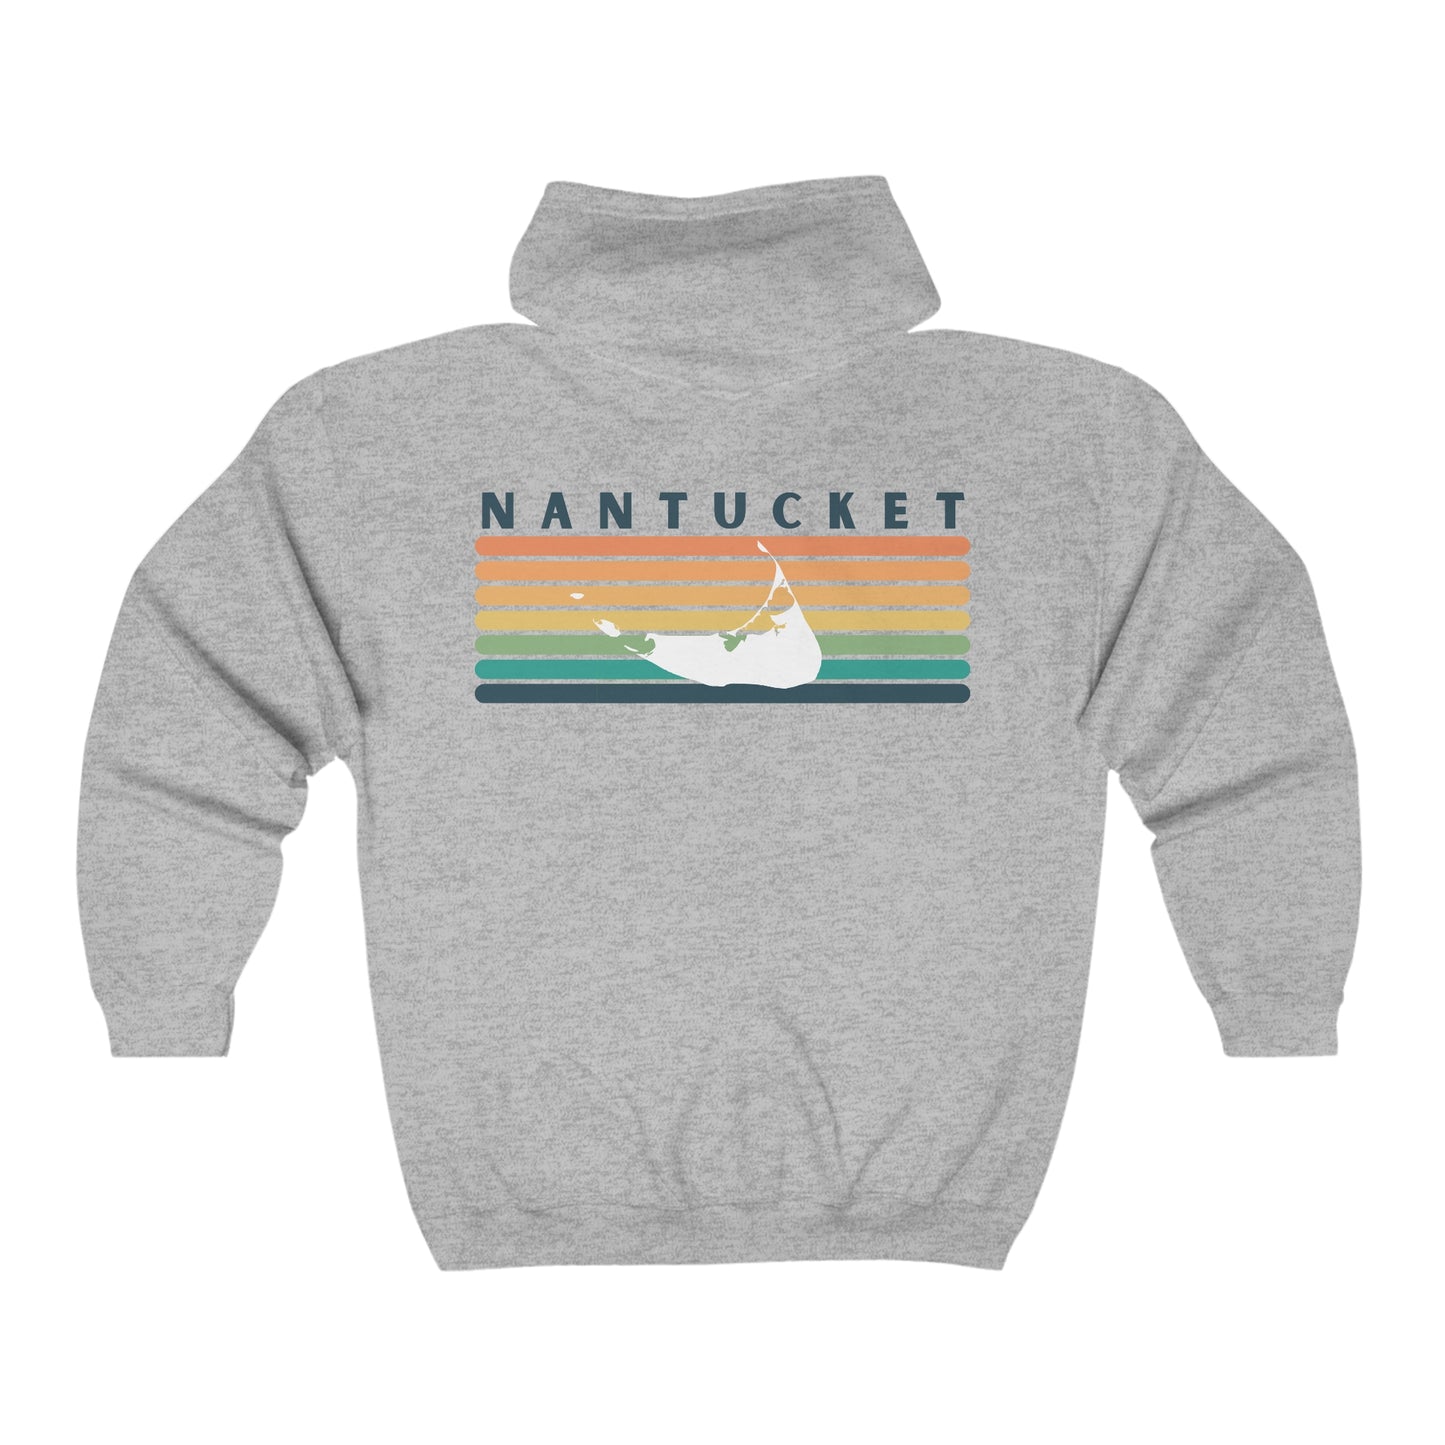 Nantucket Inspired Full Zip Hoodie - Soft Fleece, Classic Fit - Essential Island Wear